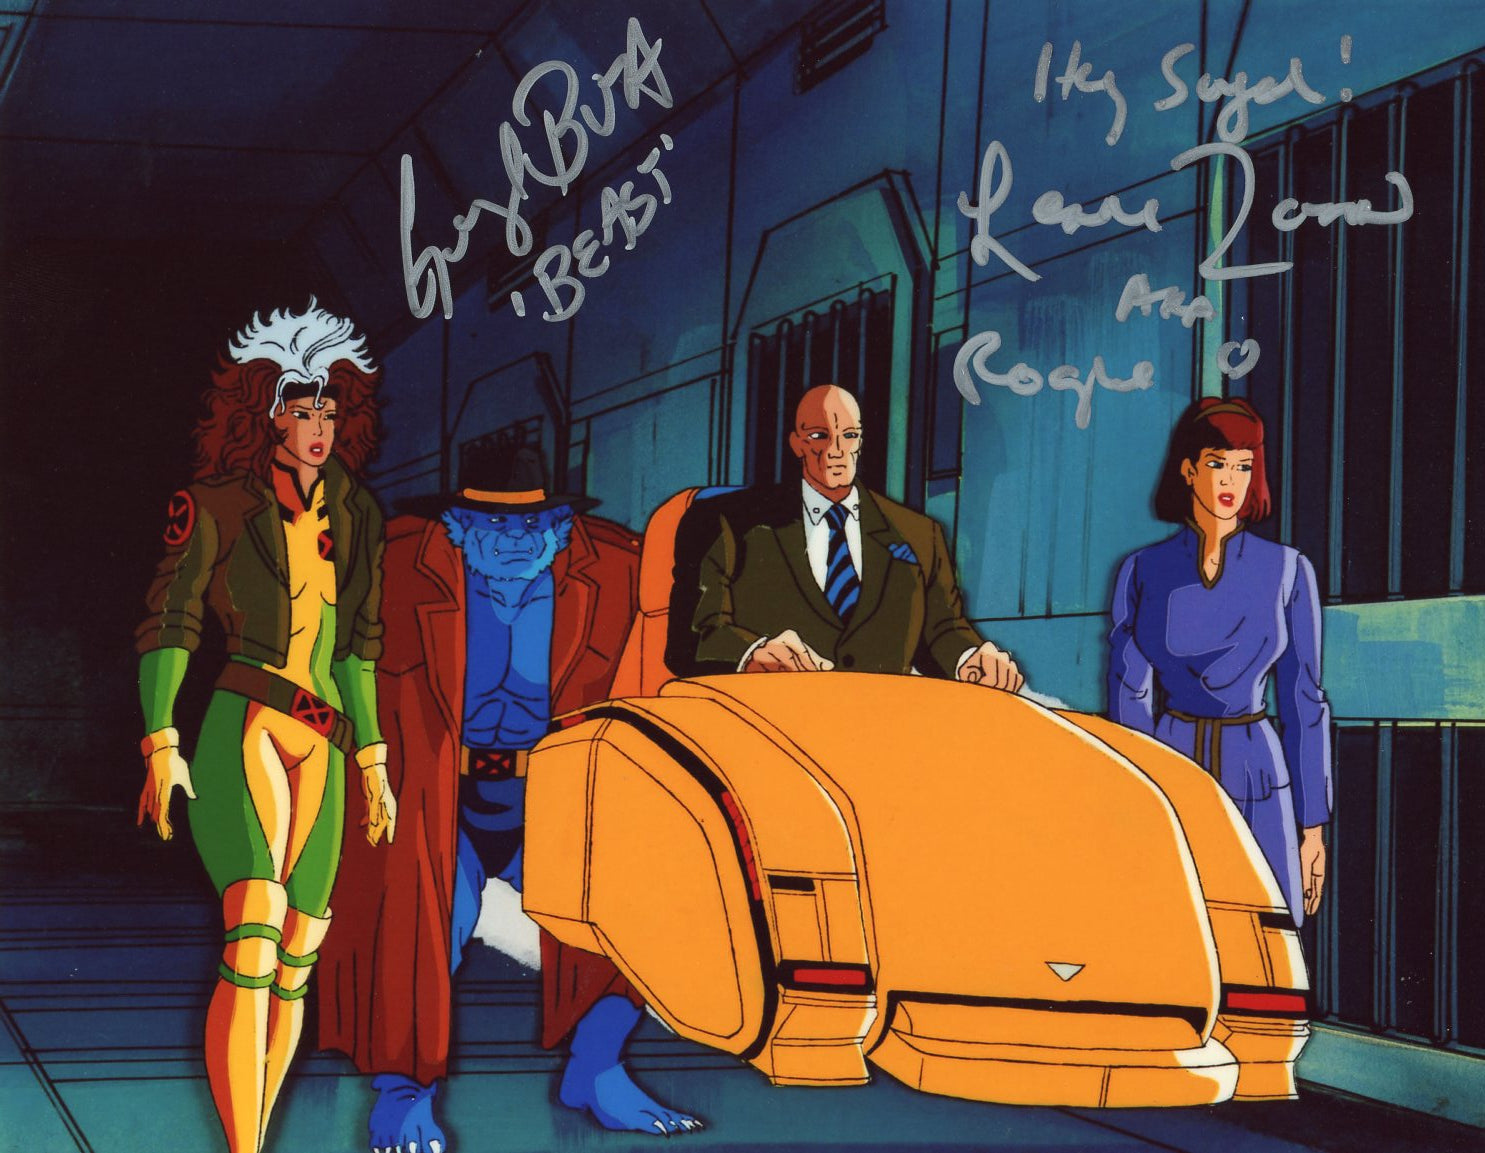 X-Men: The Animated Series 8x10 Photo Cast x2 Signed Buza, Zann JSA Certified Autograph